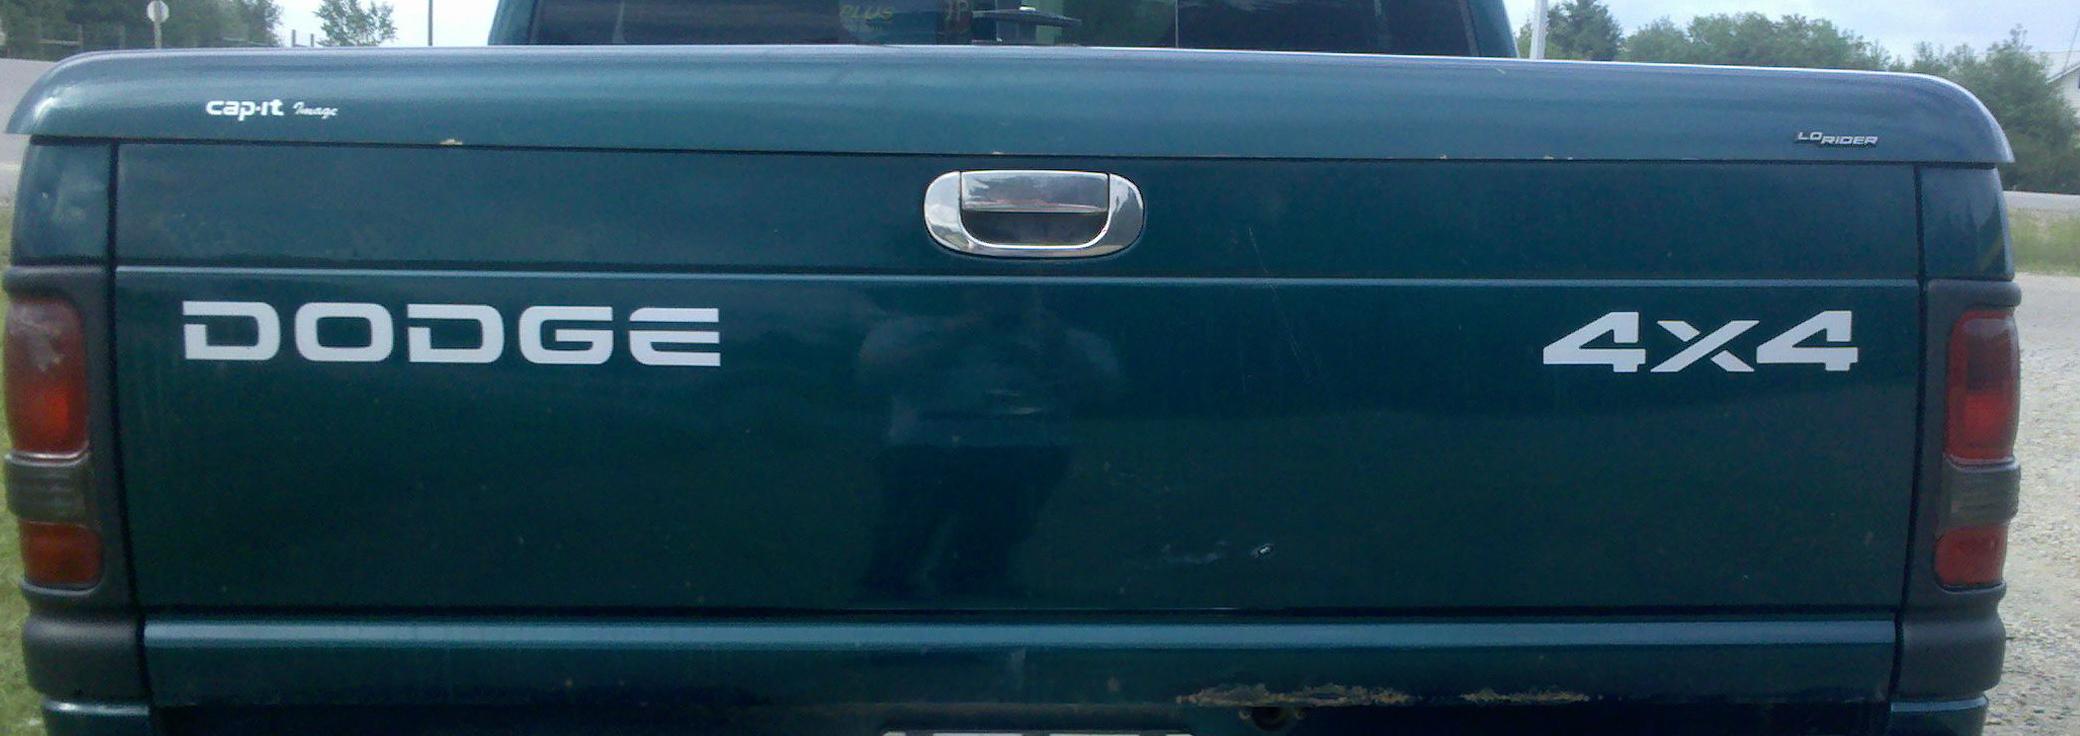 Dodge Ram Dakota Off Road Tailgate 2500 1500 decals stickers1